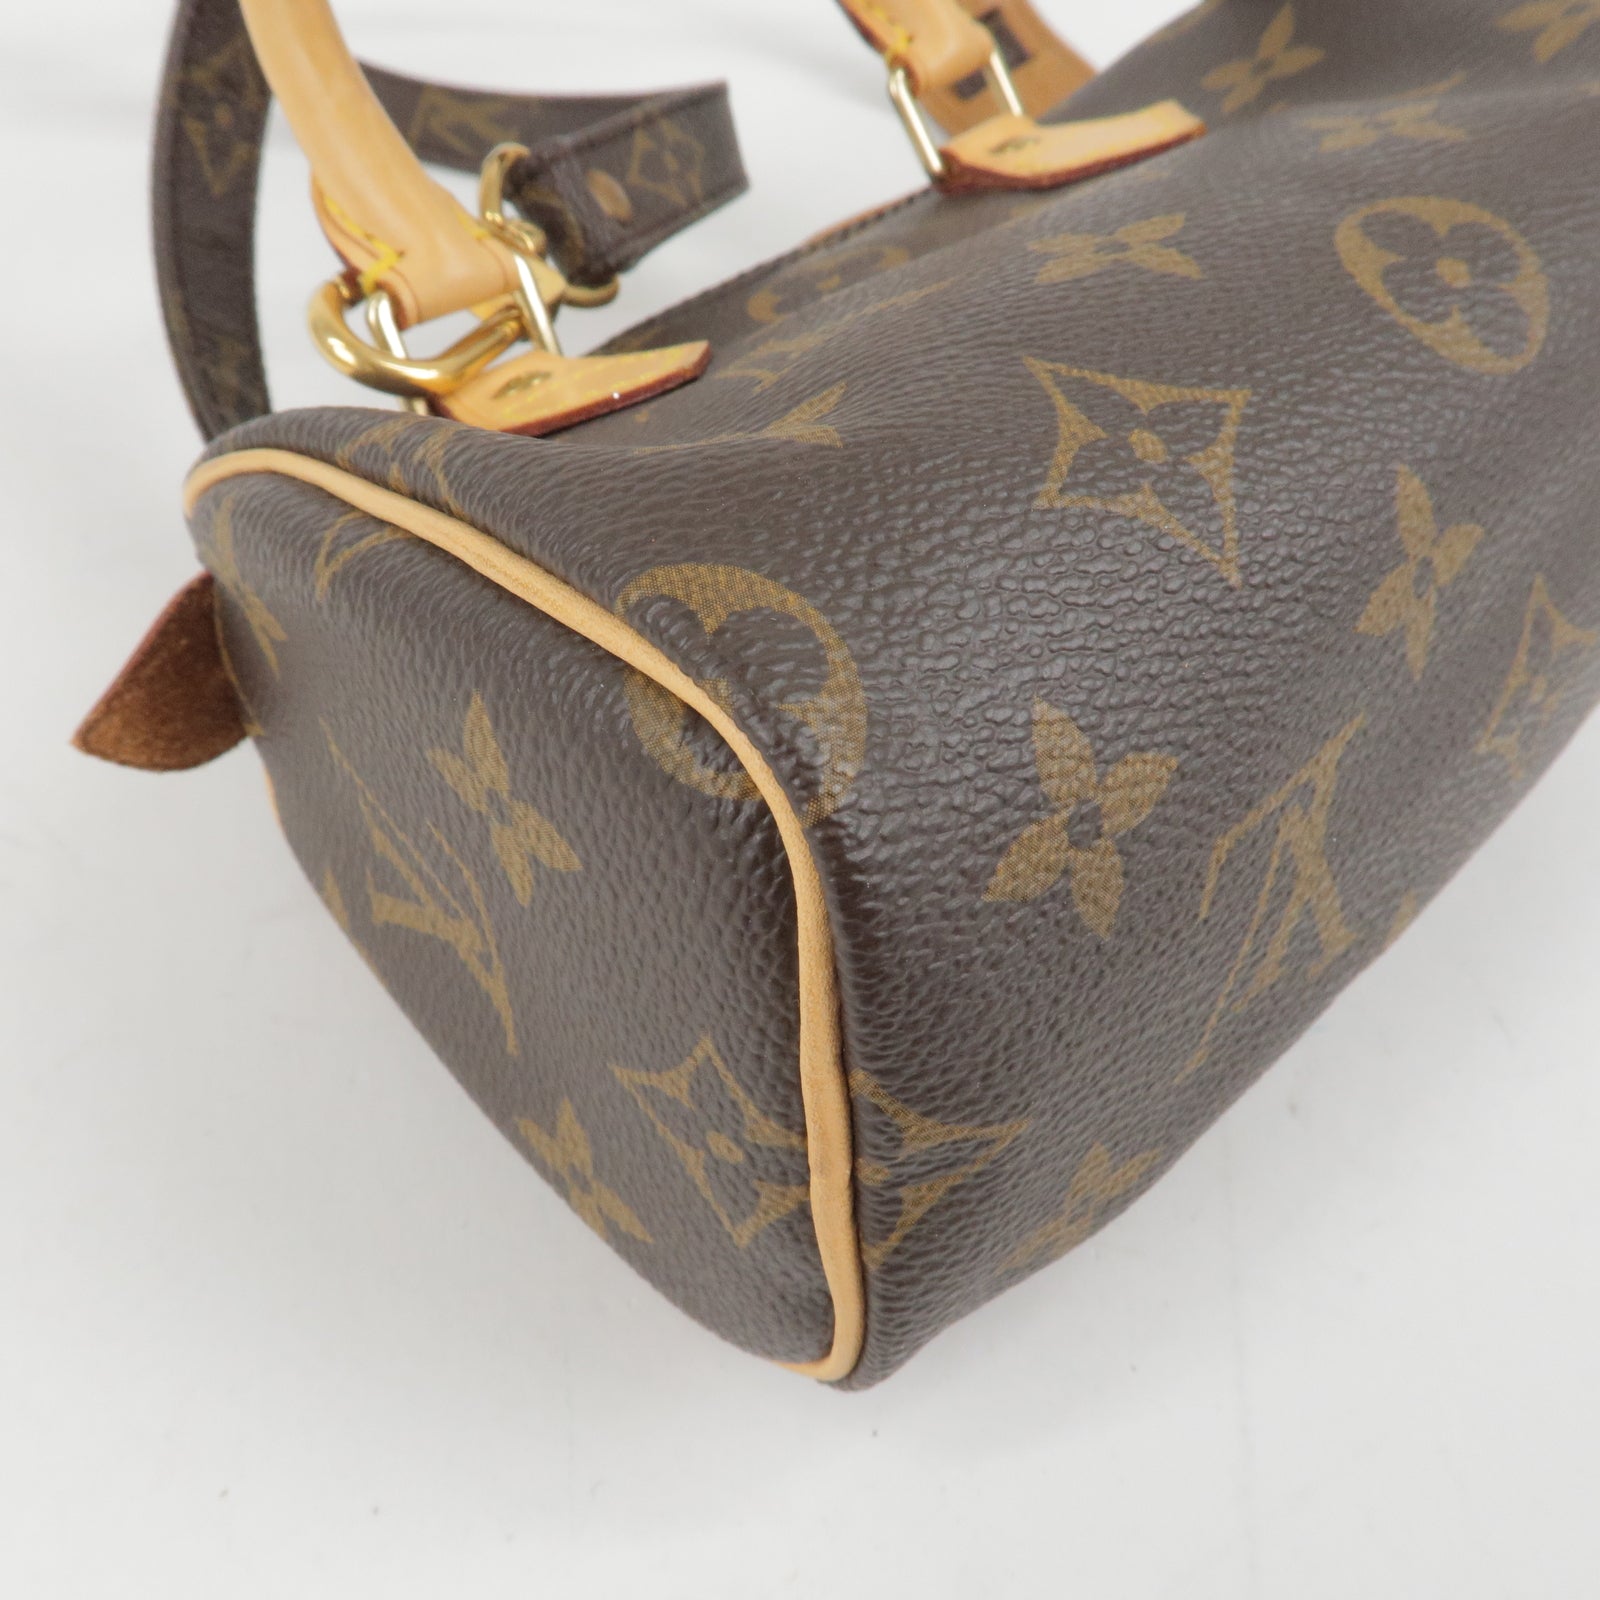 Louis Vuitton Damier Ebene Kensington - Handbag | Pre-owned & Certified | used Second Hand | Unisex